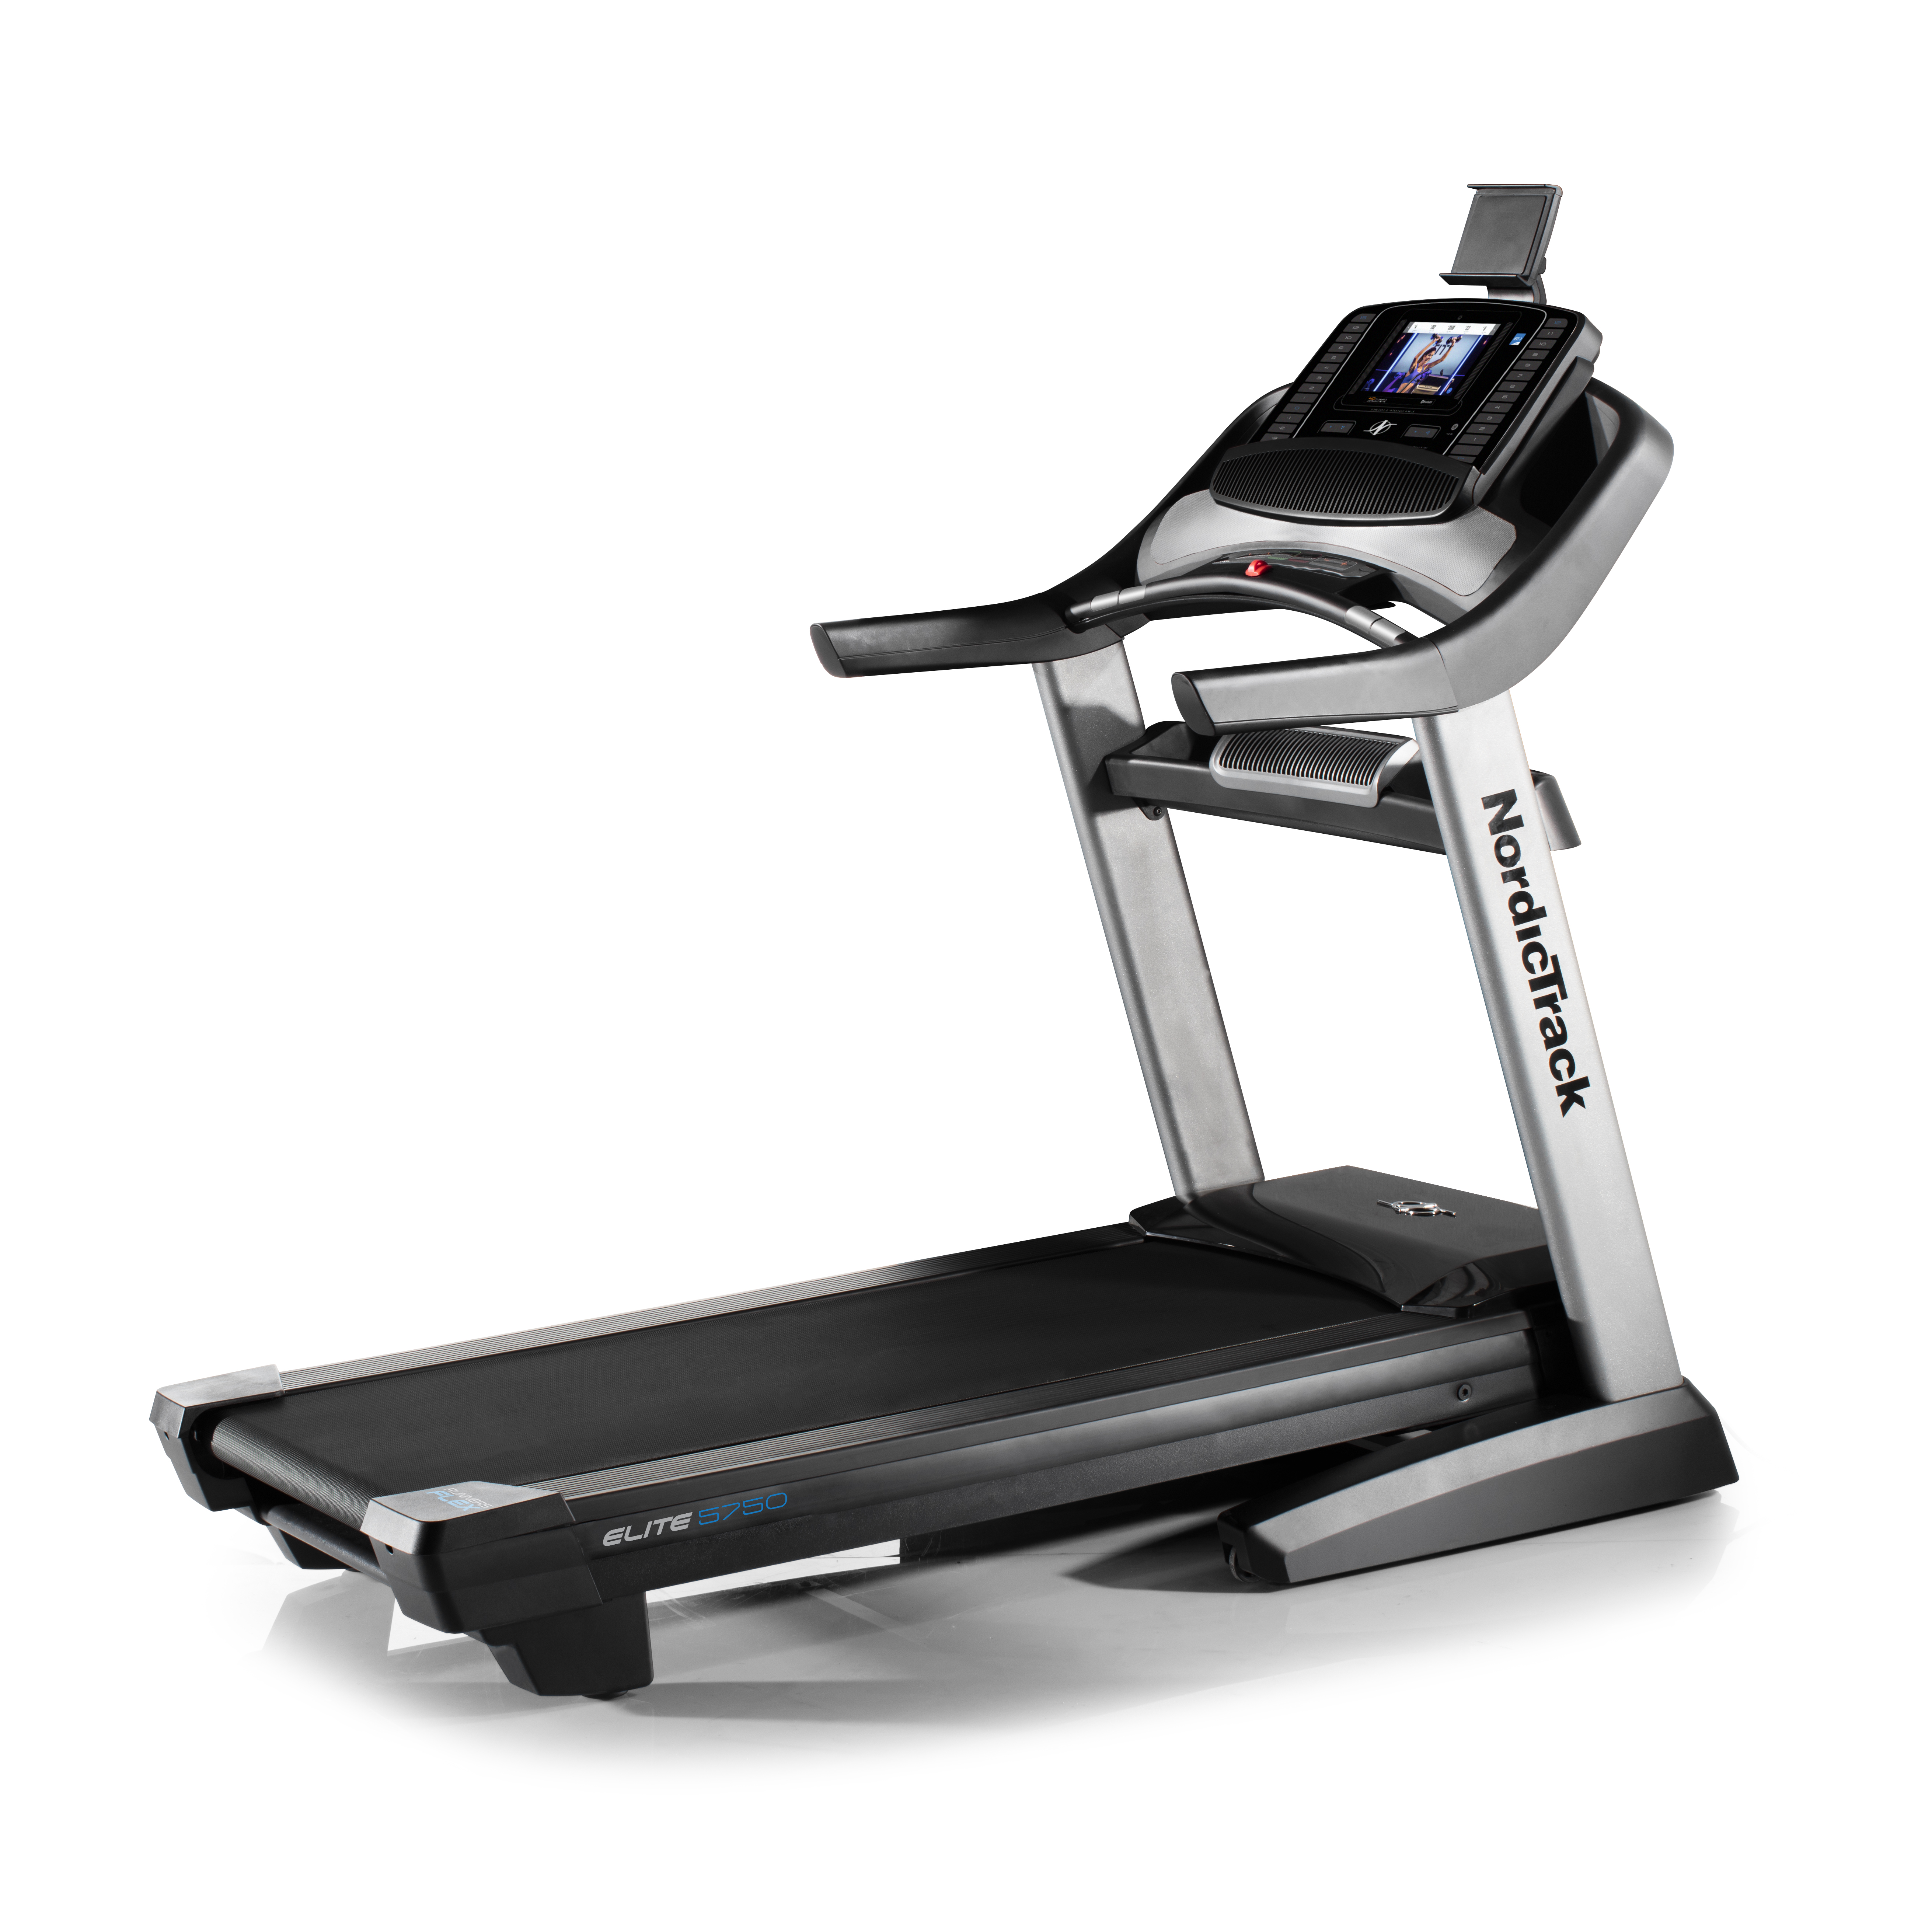 NordicTrack Elite 5750 Treadmill